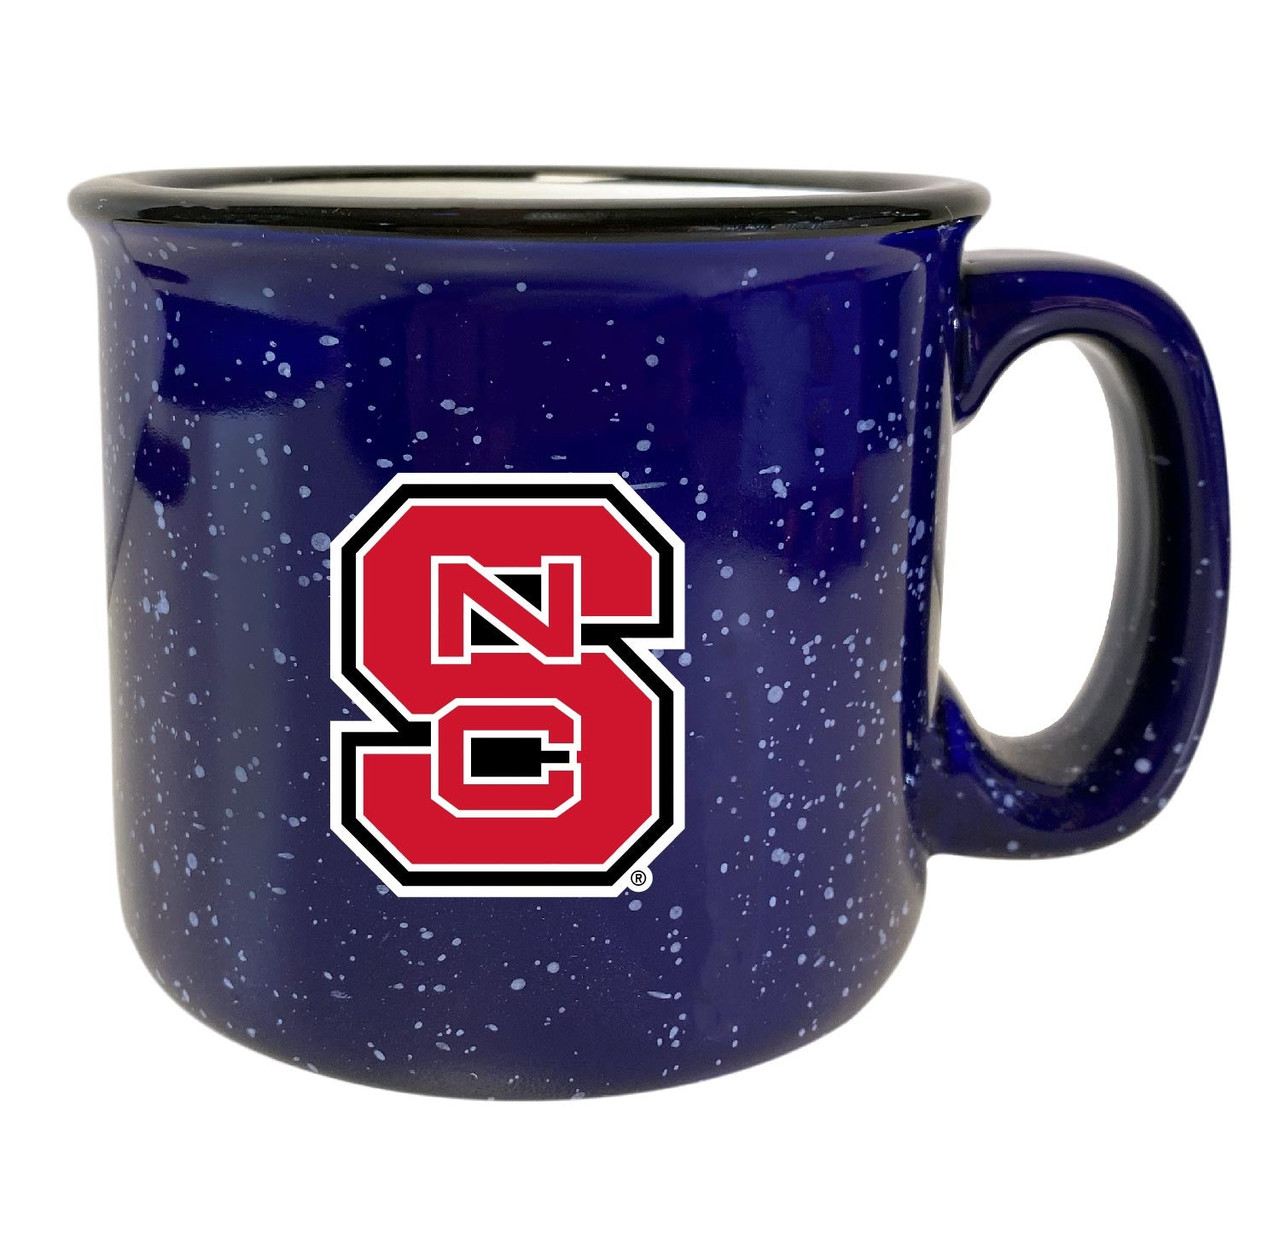 NC State Wolfpack 8 oz Speckled Ceramic Camper Coffee Mug (Navy).